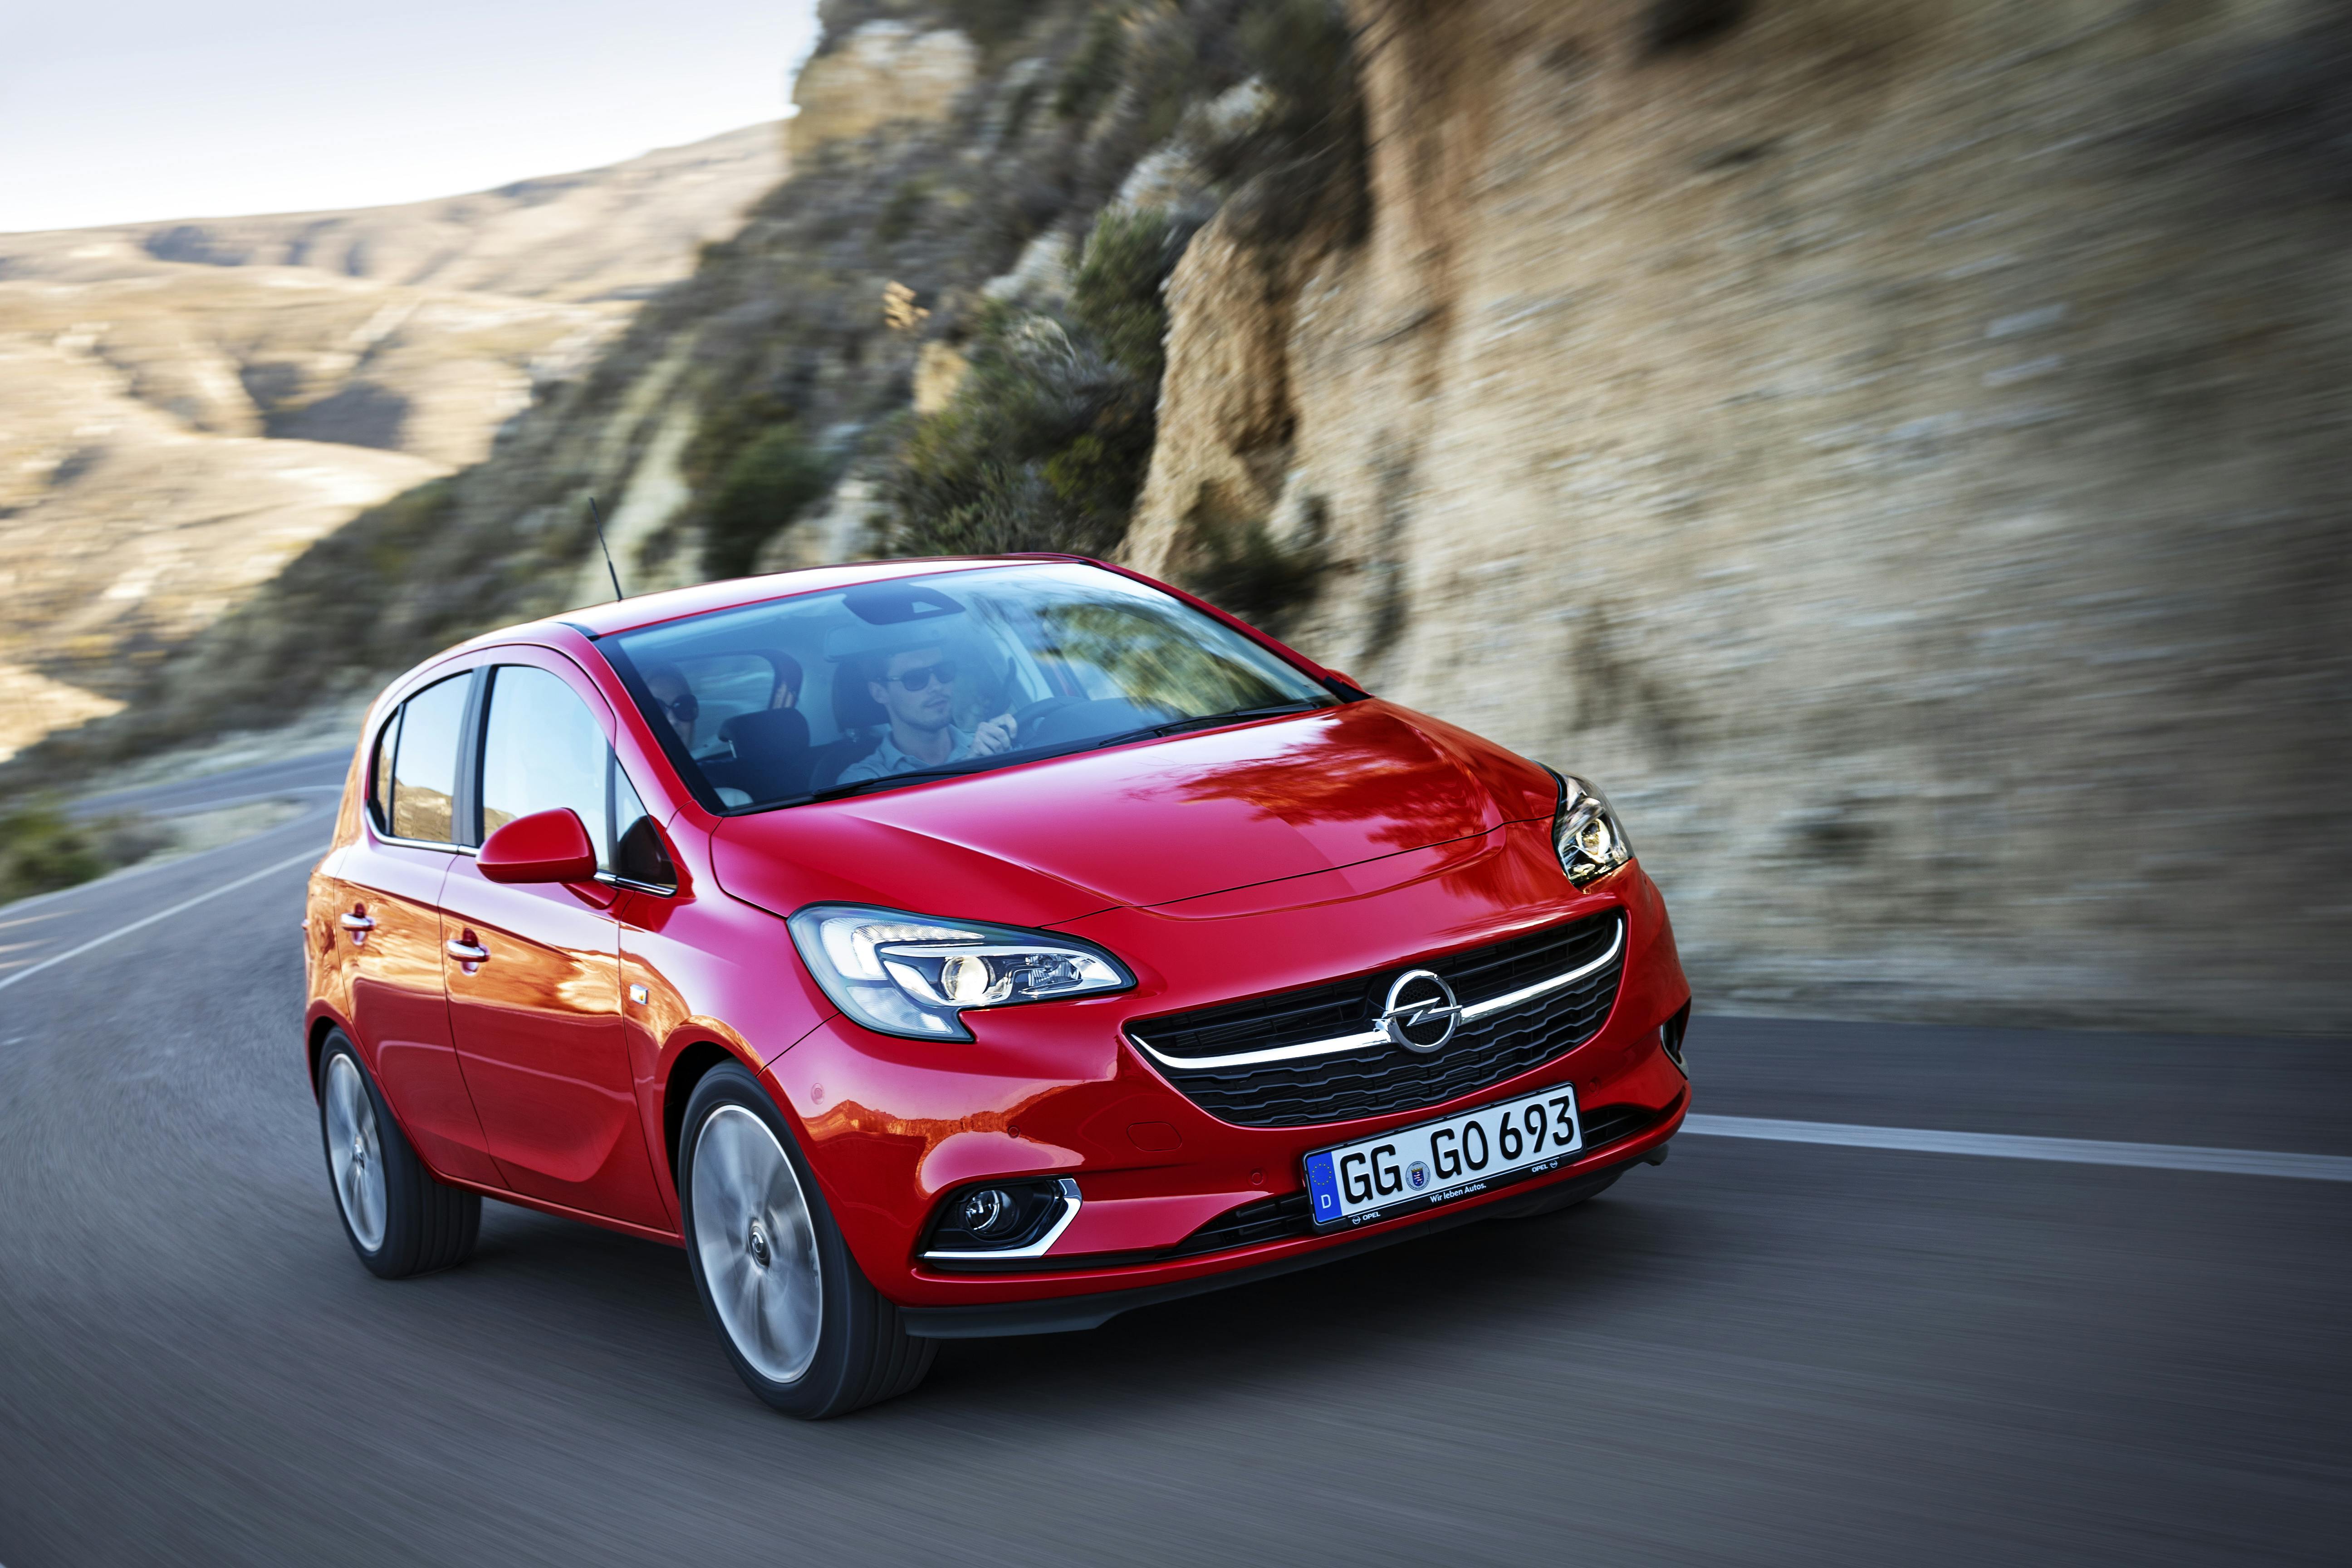 Opel Corsa E (2014-2019) Benziner Gebrauchtwagen Test